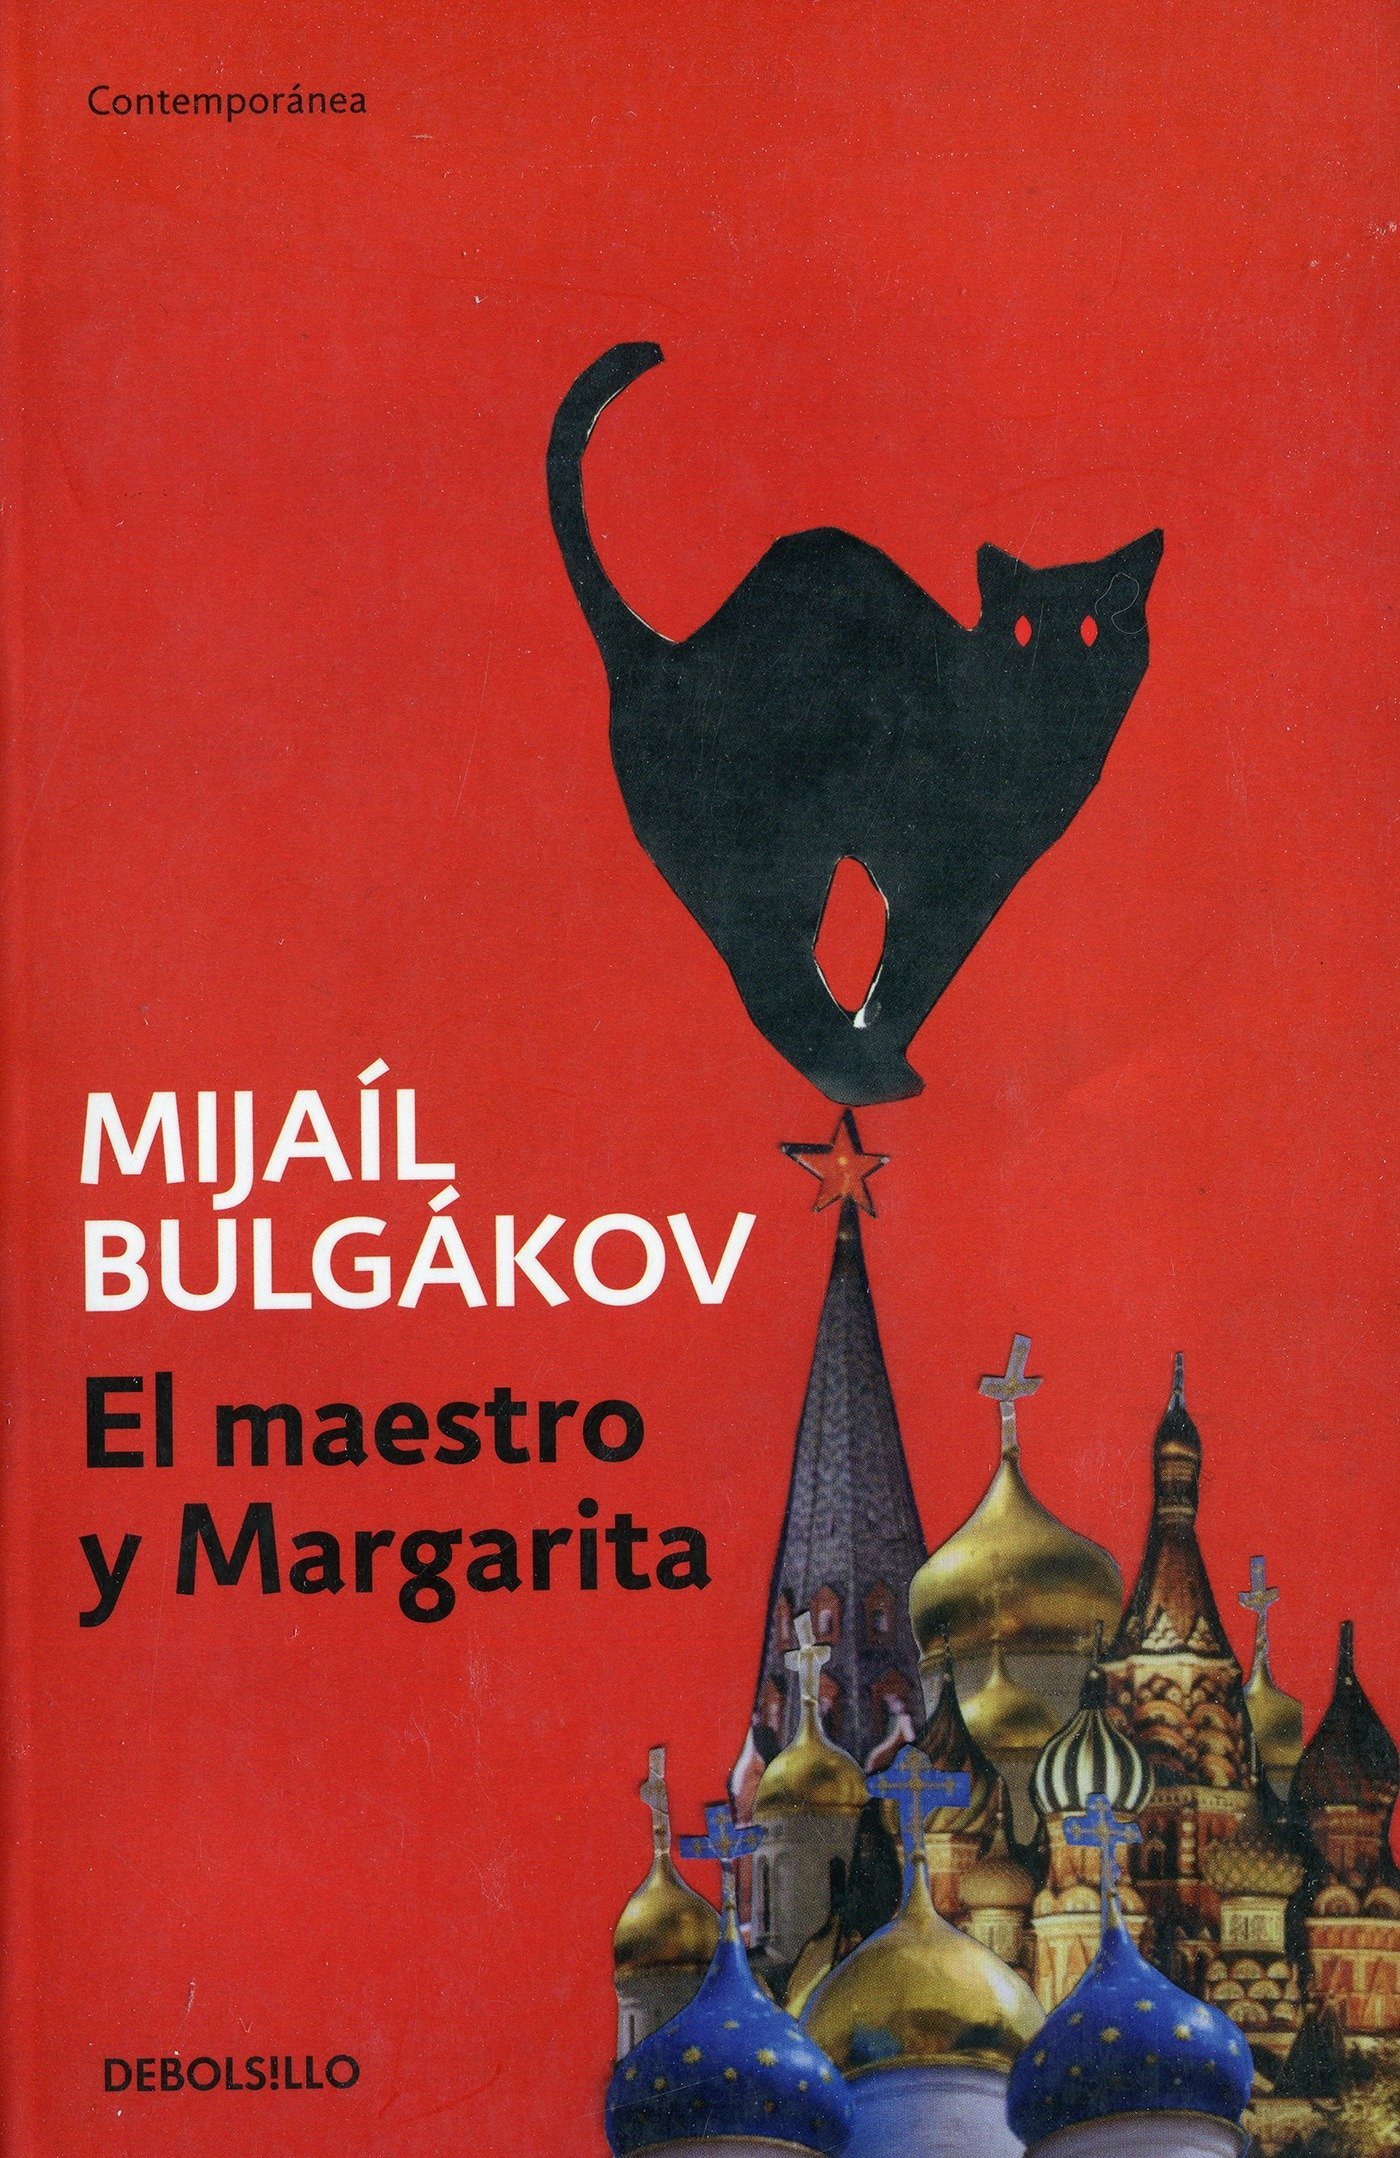 Mijail Bulgakov El maestro y Margarita 